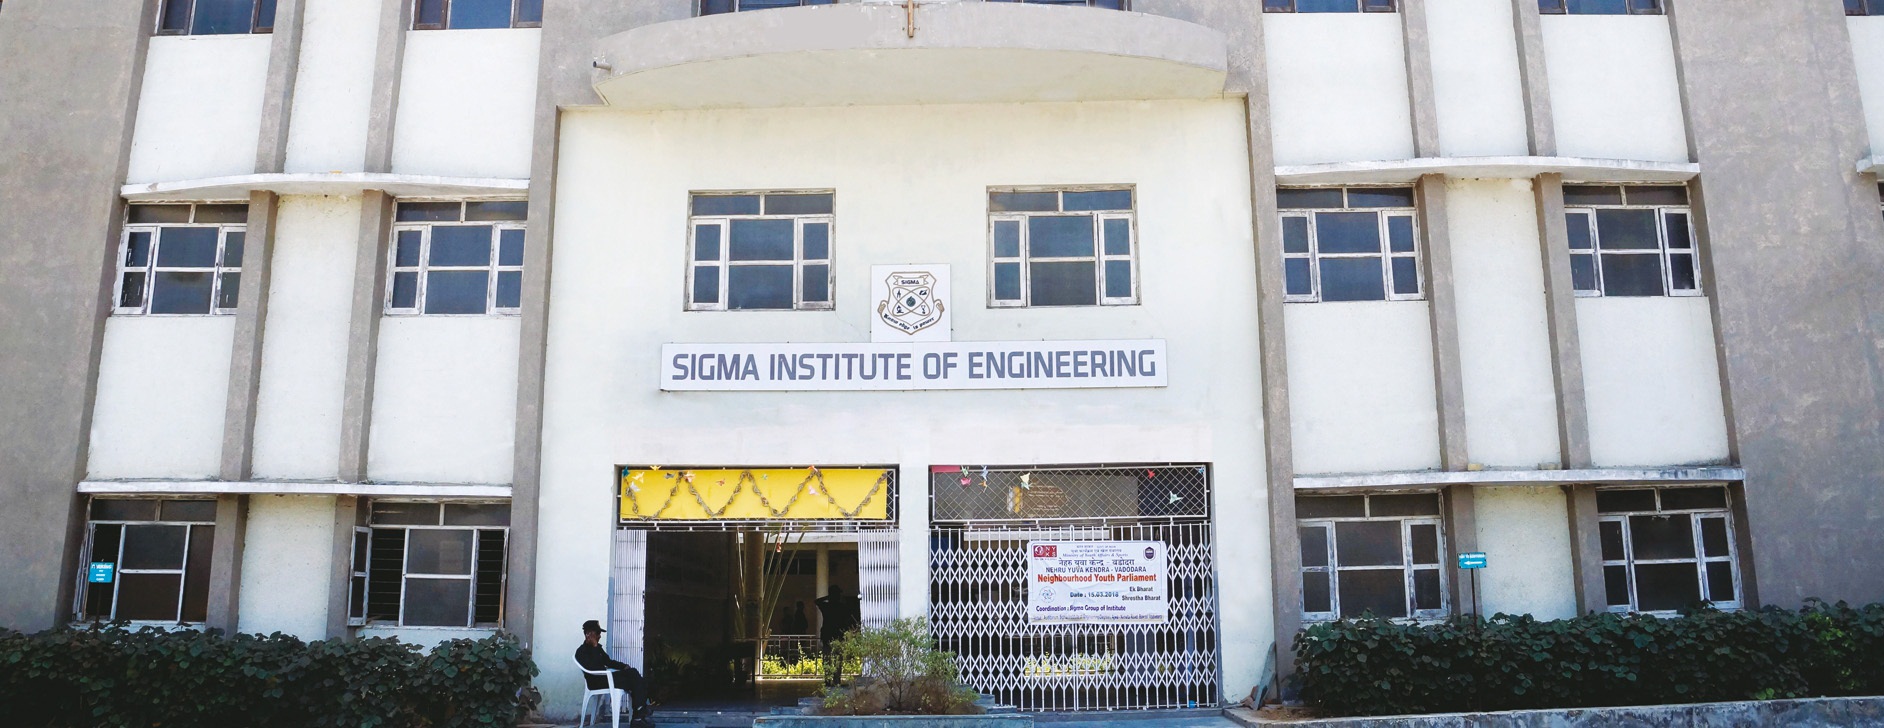 Sigma Institute of Engineering, Vadodara Image